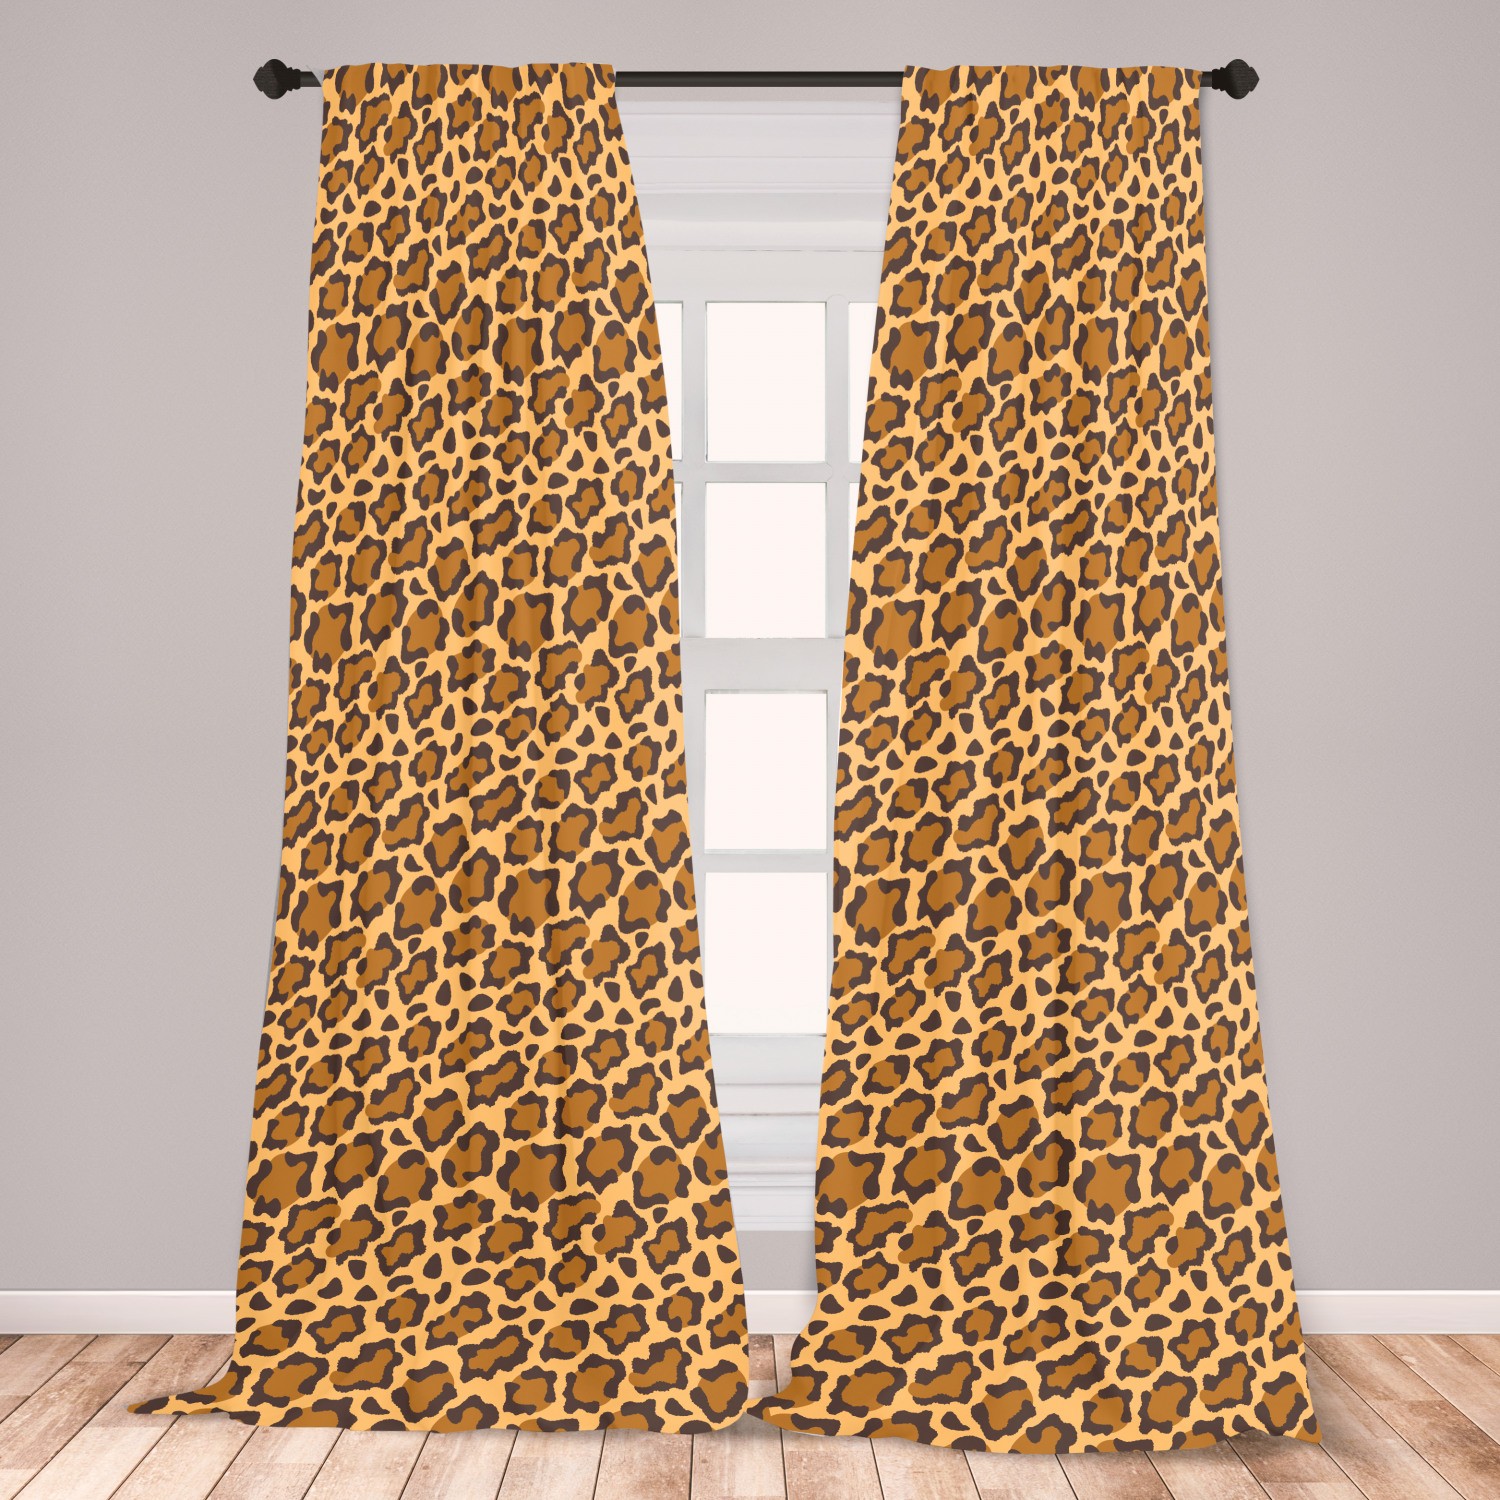 Leopard print curtains 2 panels set rhythmic altered